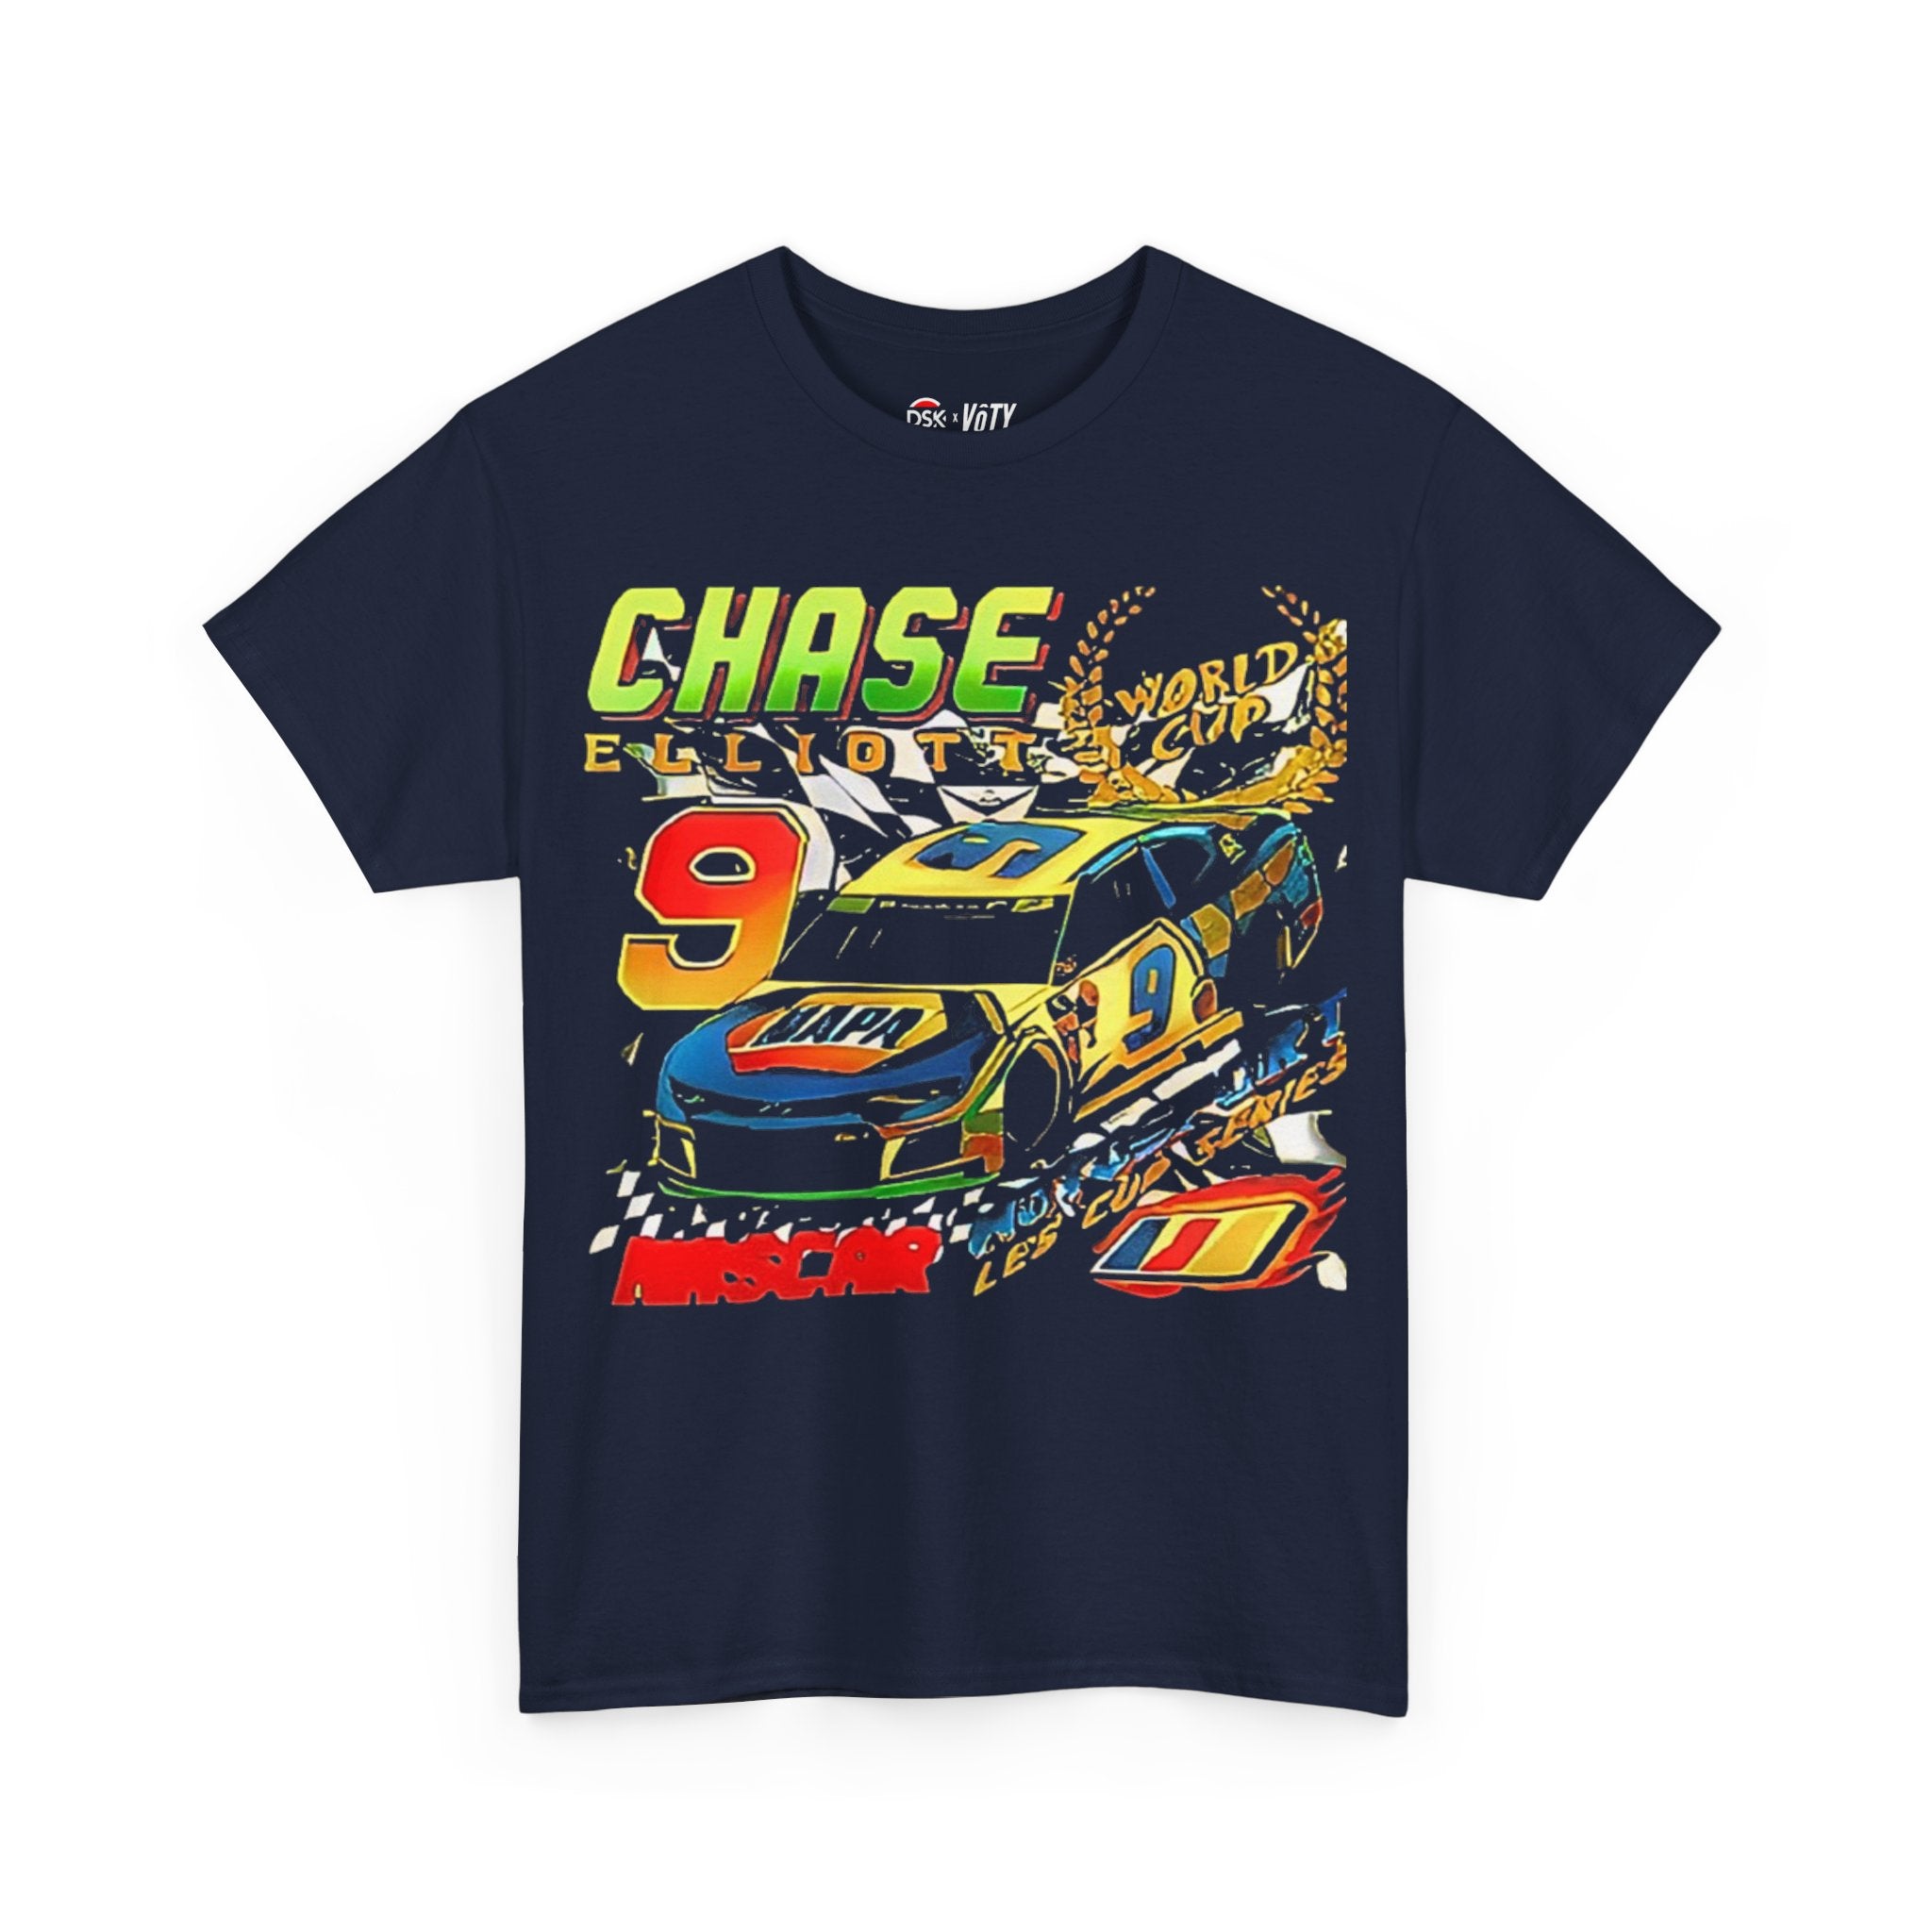 Chase Elliot T-shirt